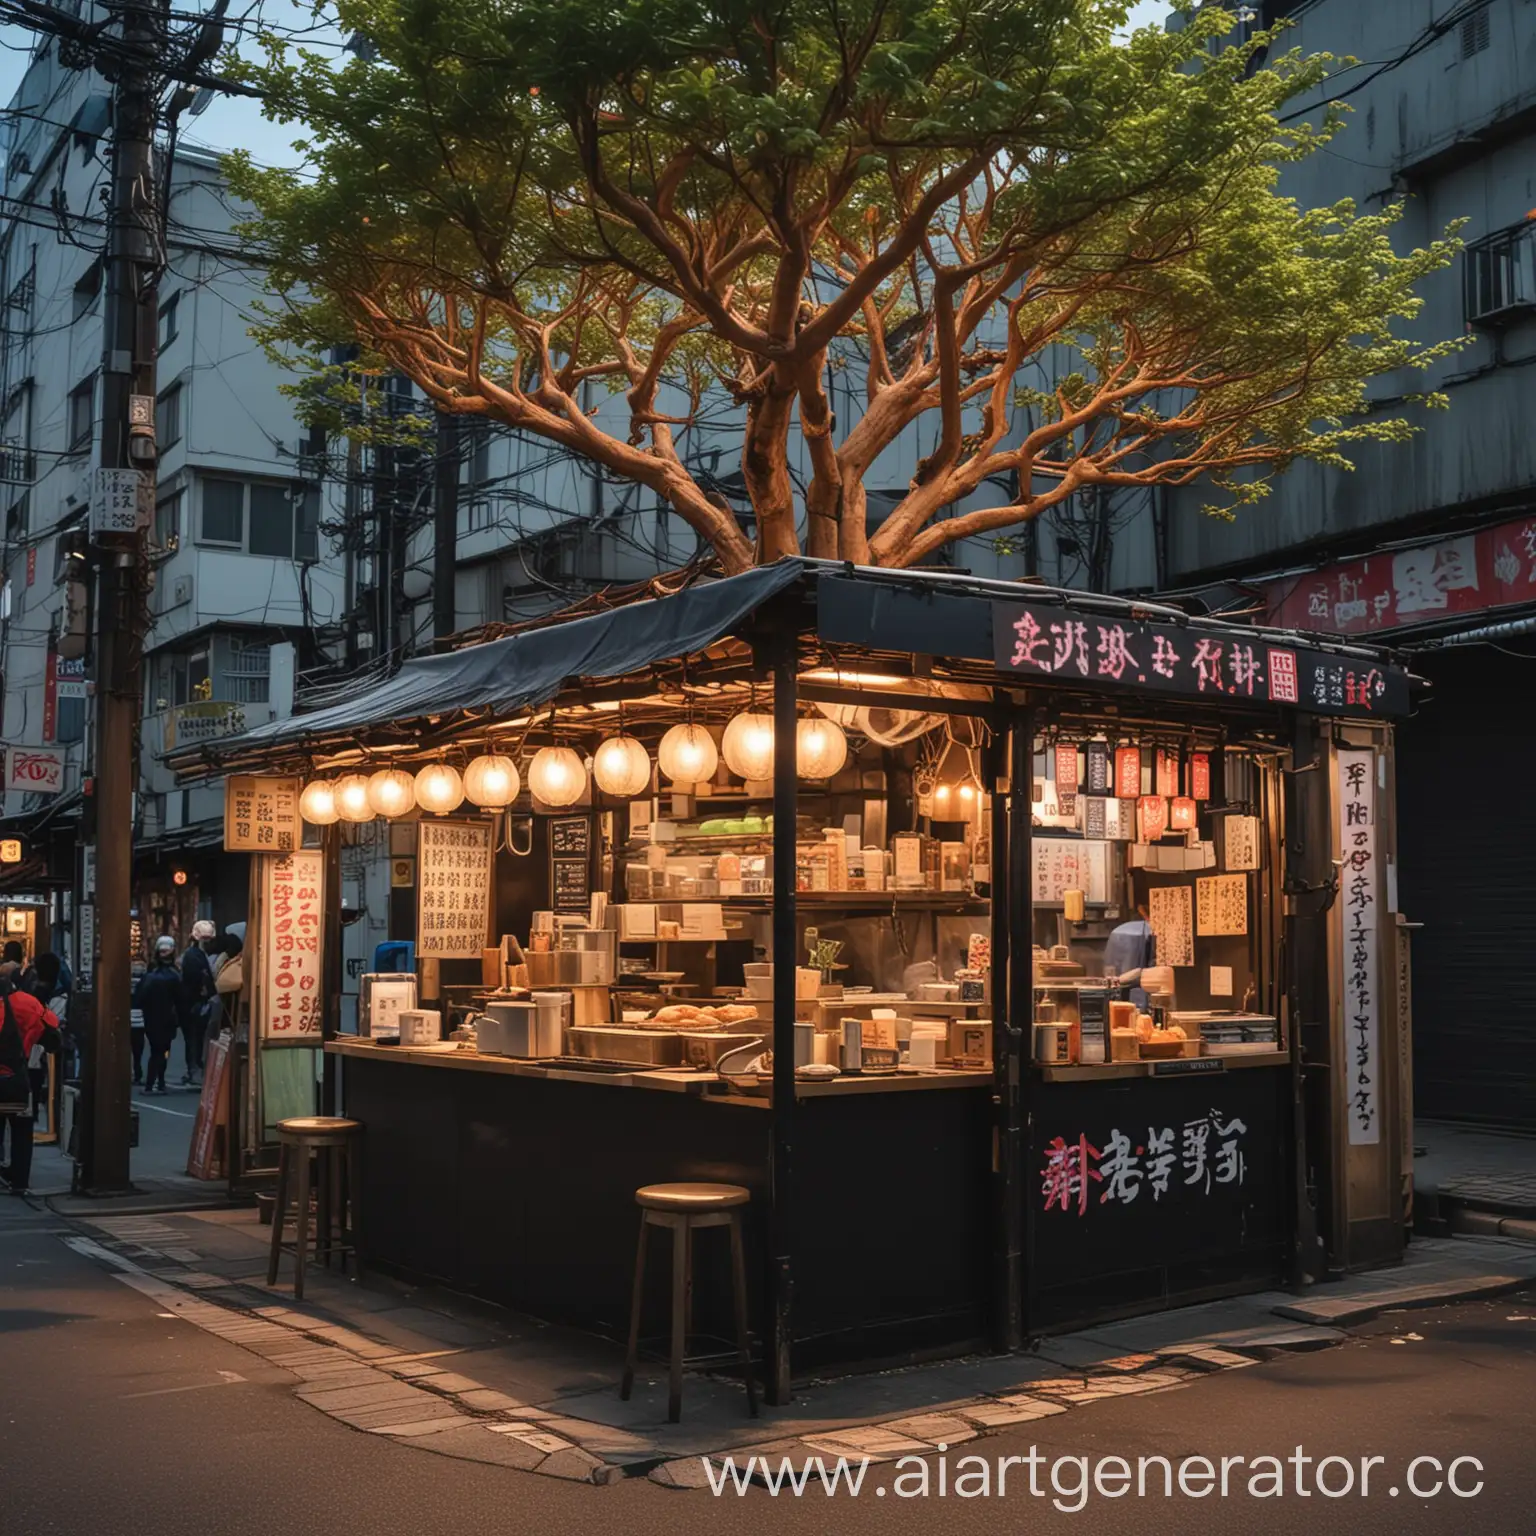 Cyberpunk-Japanese-Street-Food-Stall-with-Illuminated-Tree